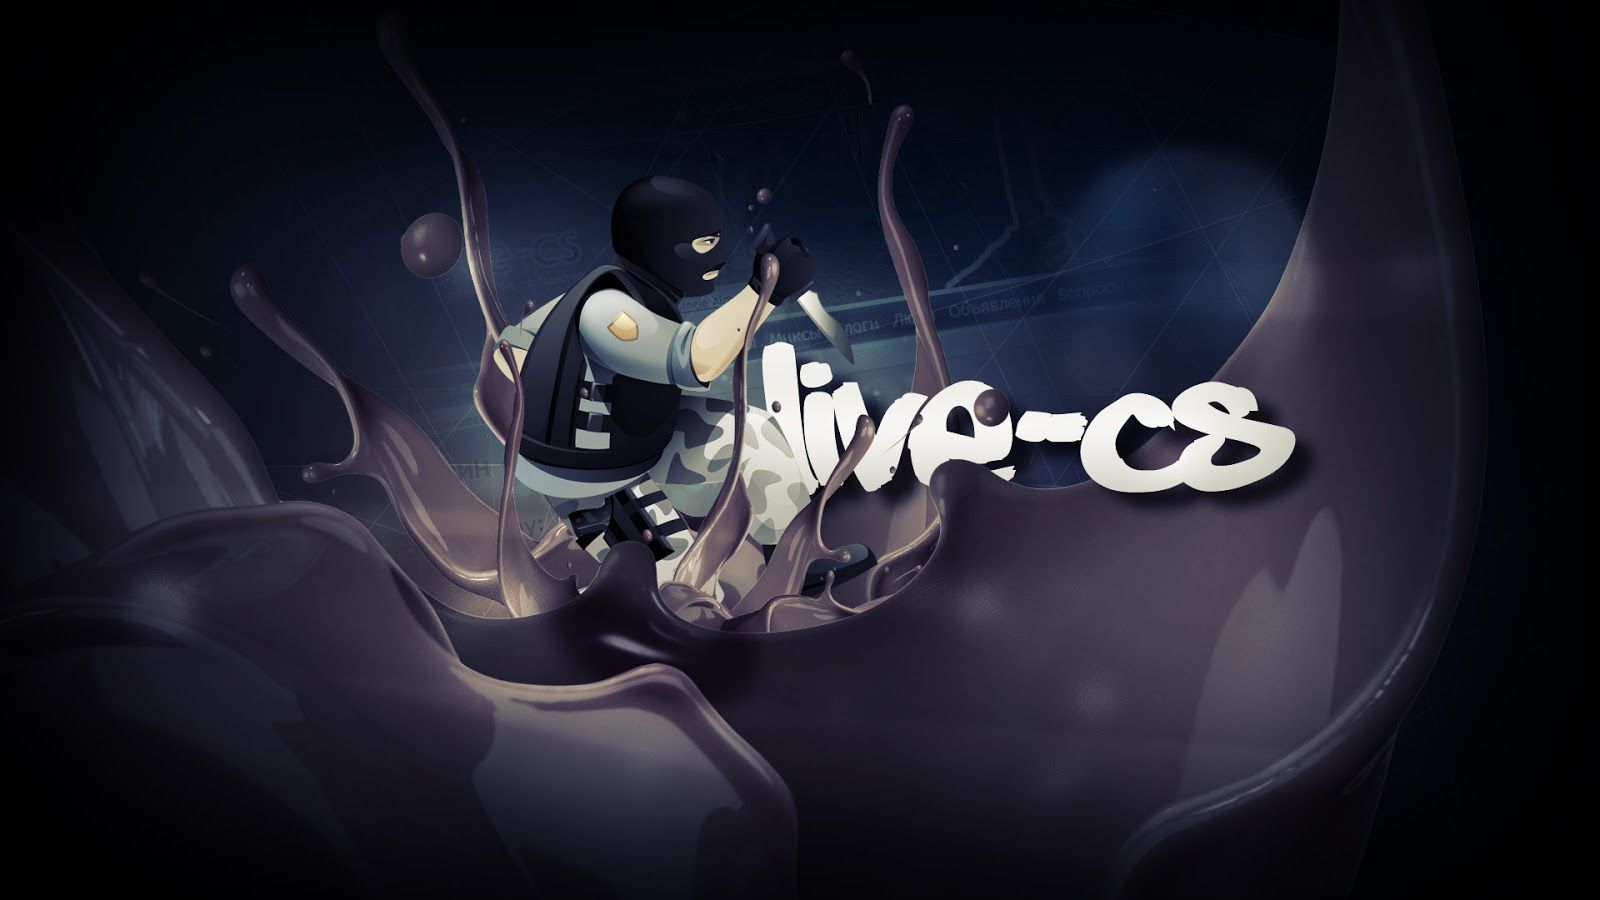 CS:GO HD Wallpaper: Cool Gaming Background